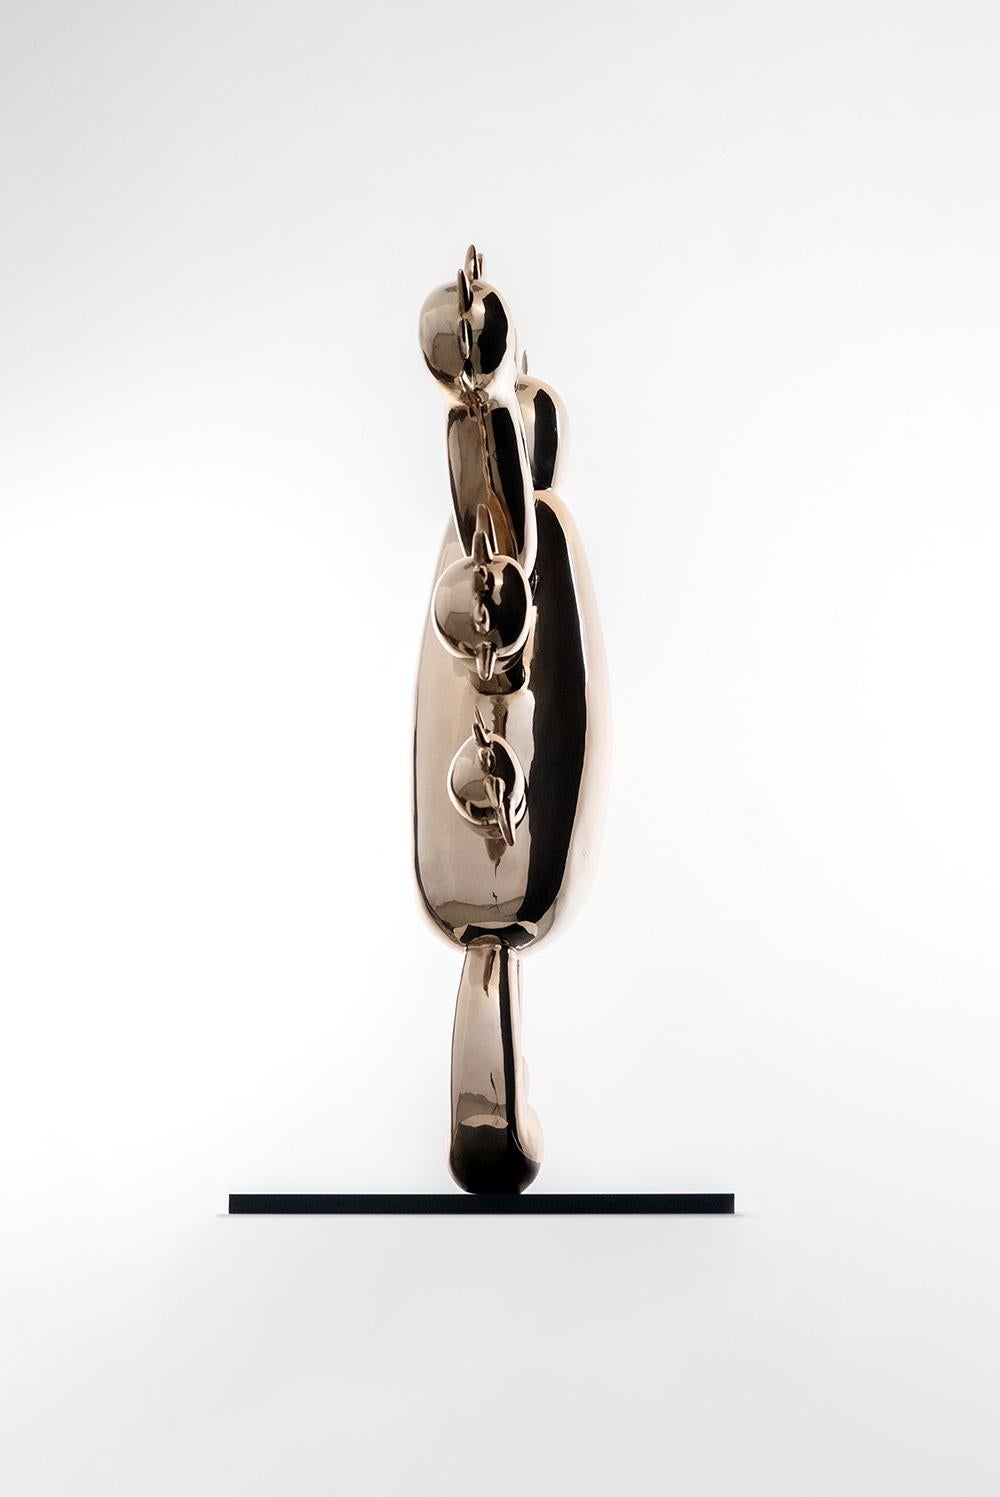 Sculpture Luzar de Marcelo Martin Burgos - Or, fantastique, monstre en vente 2